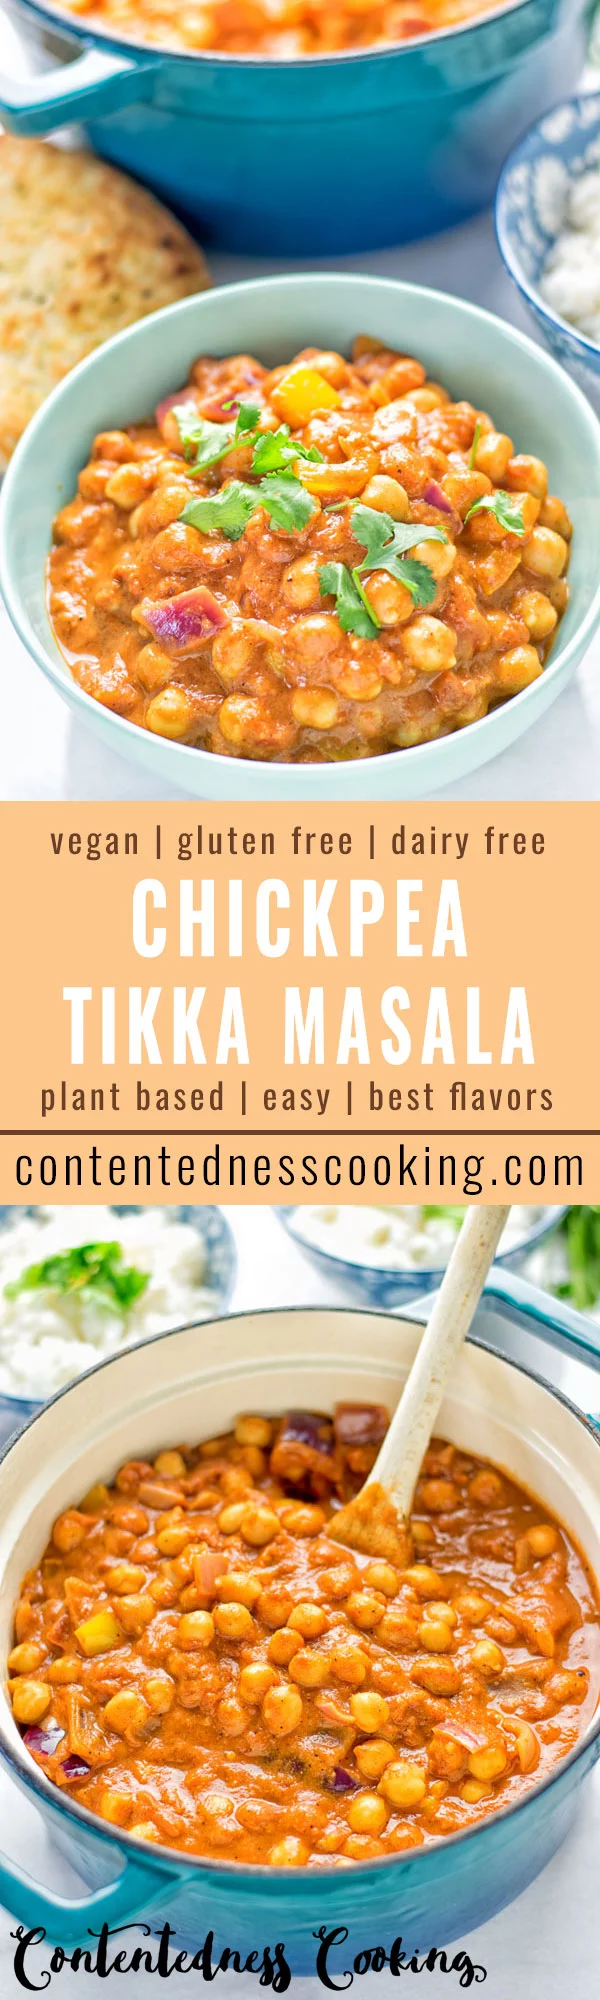 Chickpea Tikka Masala | #vegan #glutenfree #contentednesscooking